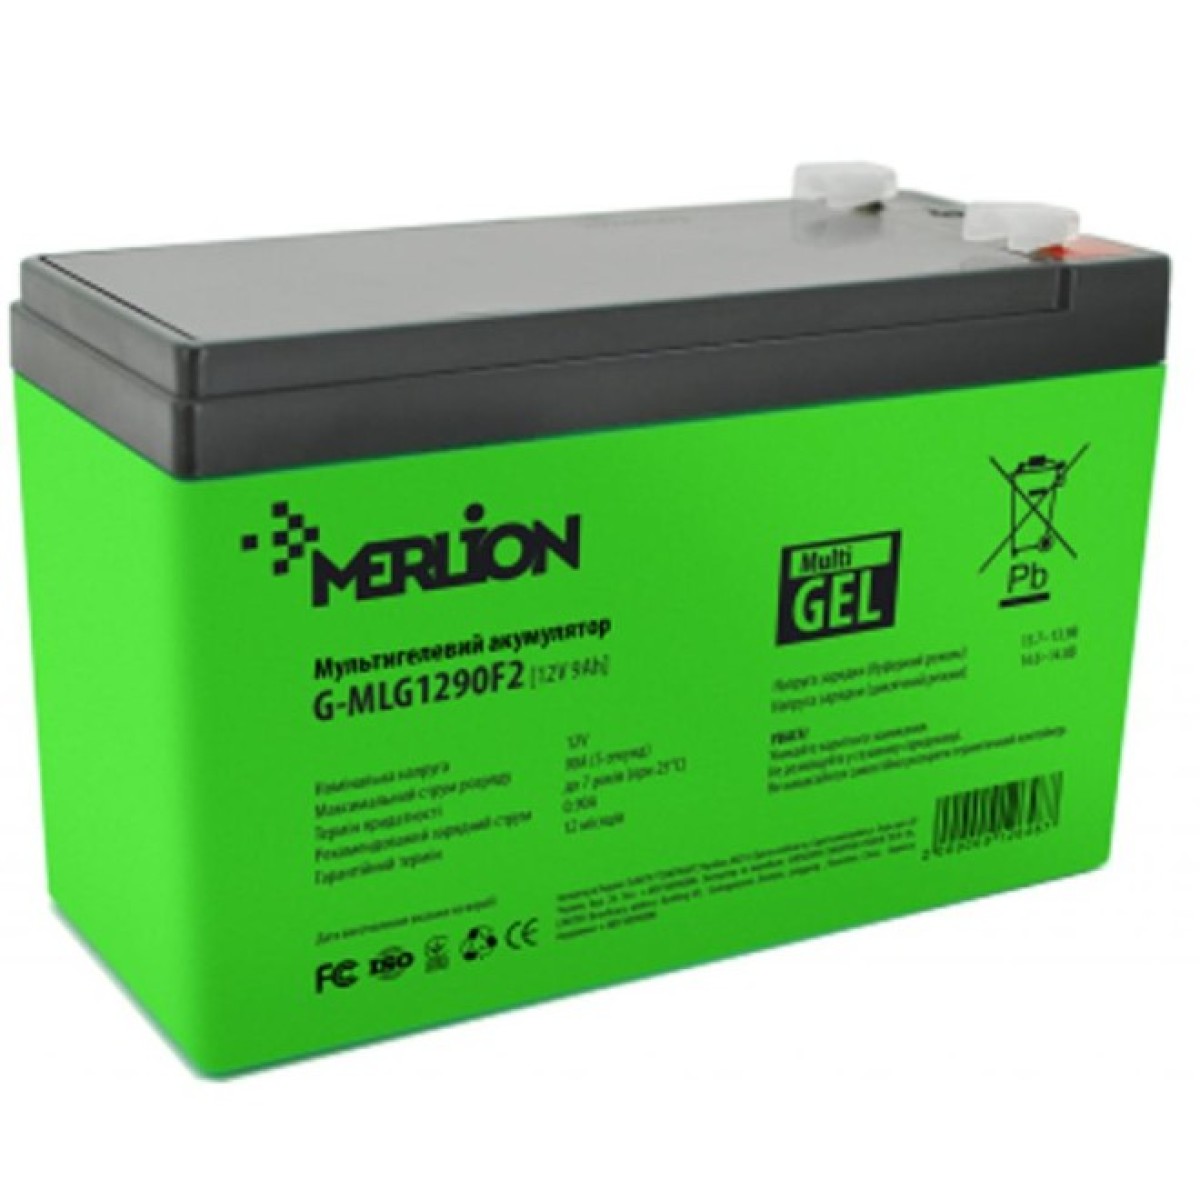 Батарея к ИБП Merlion 12V - 9.0 Ah (G-MLG1290F2) 256_256.jpg